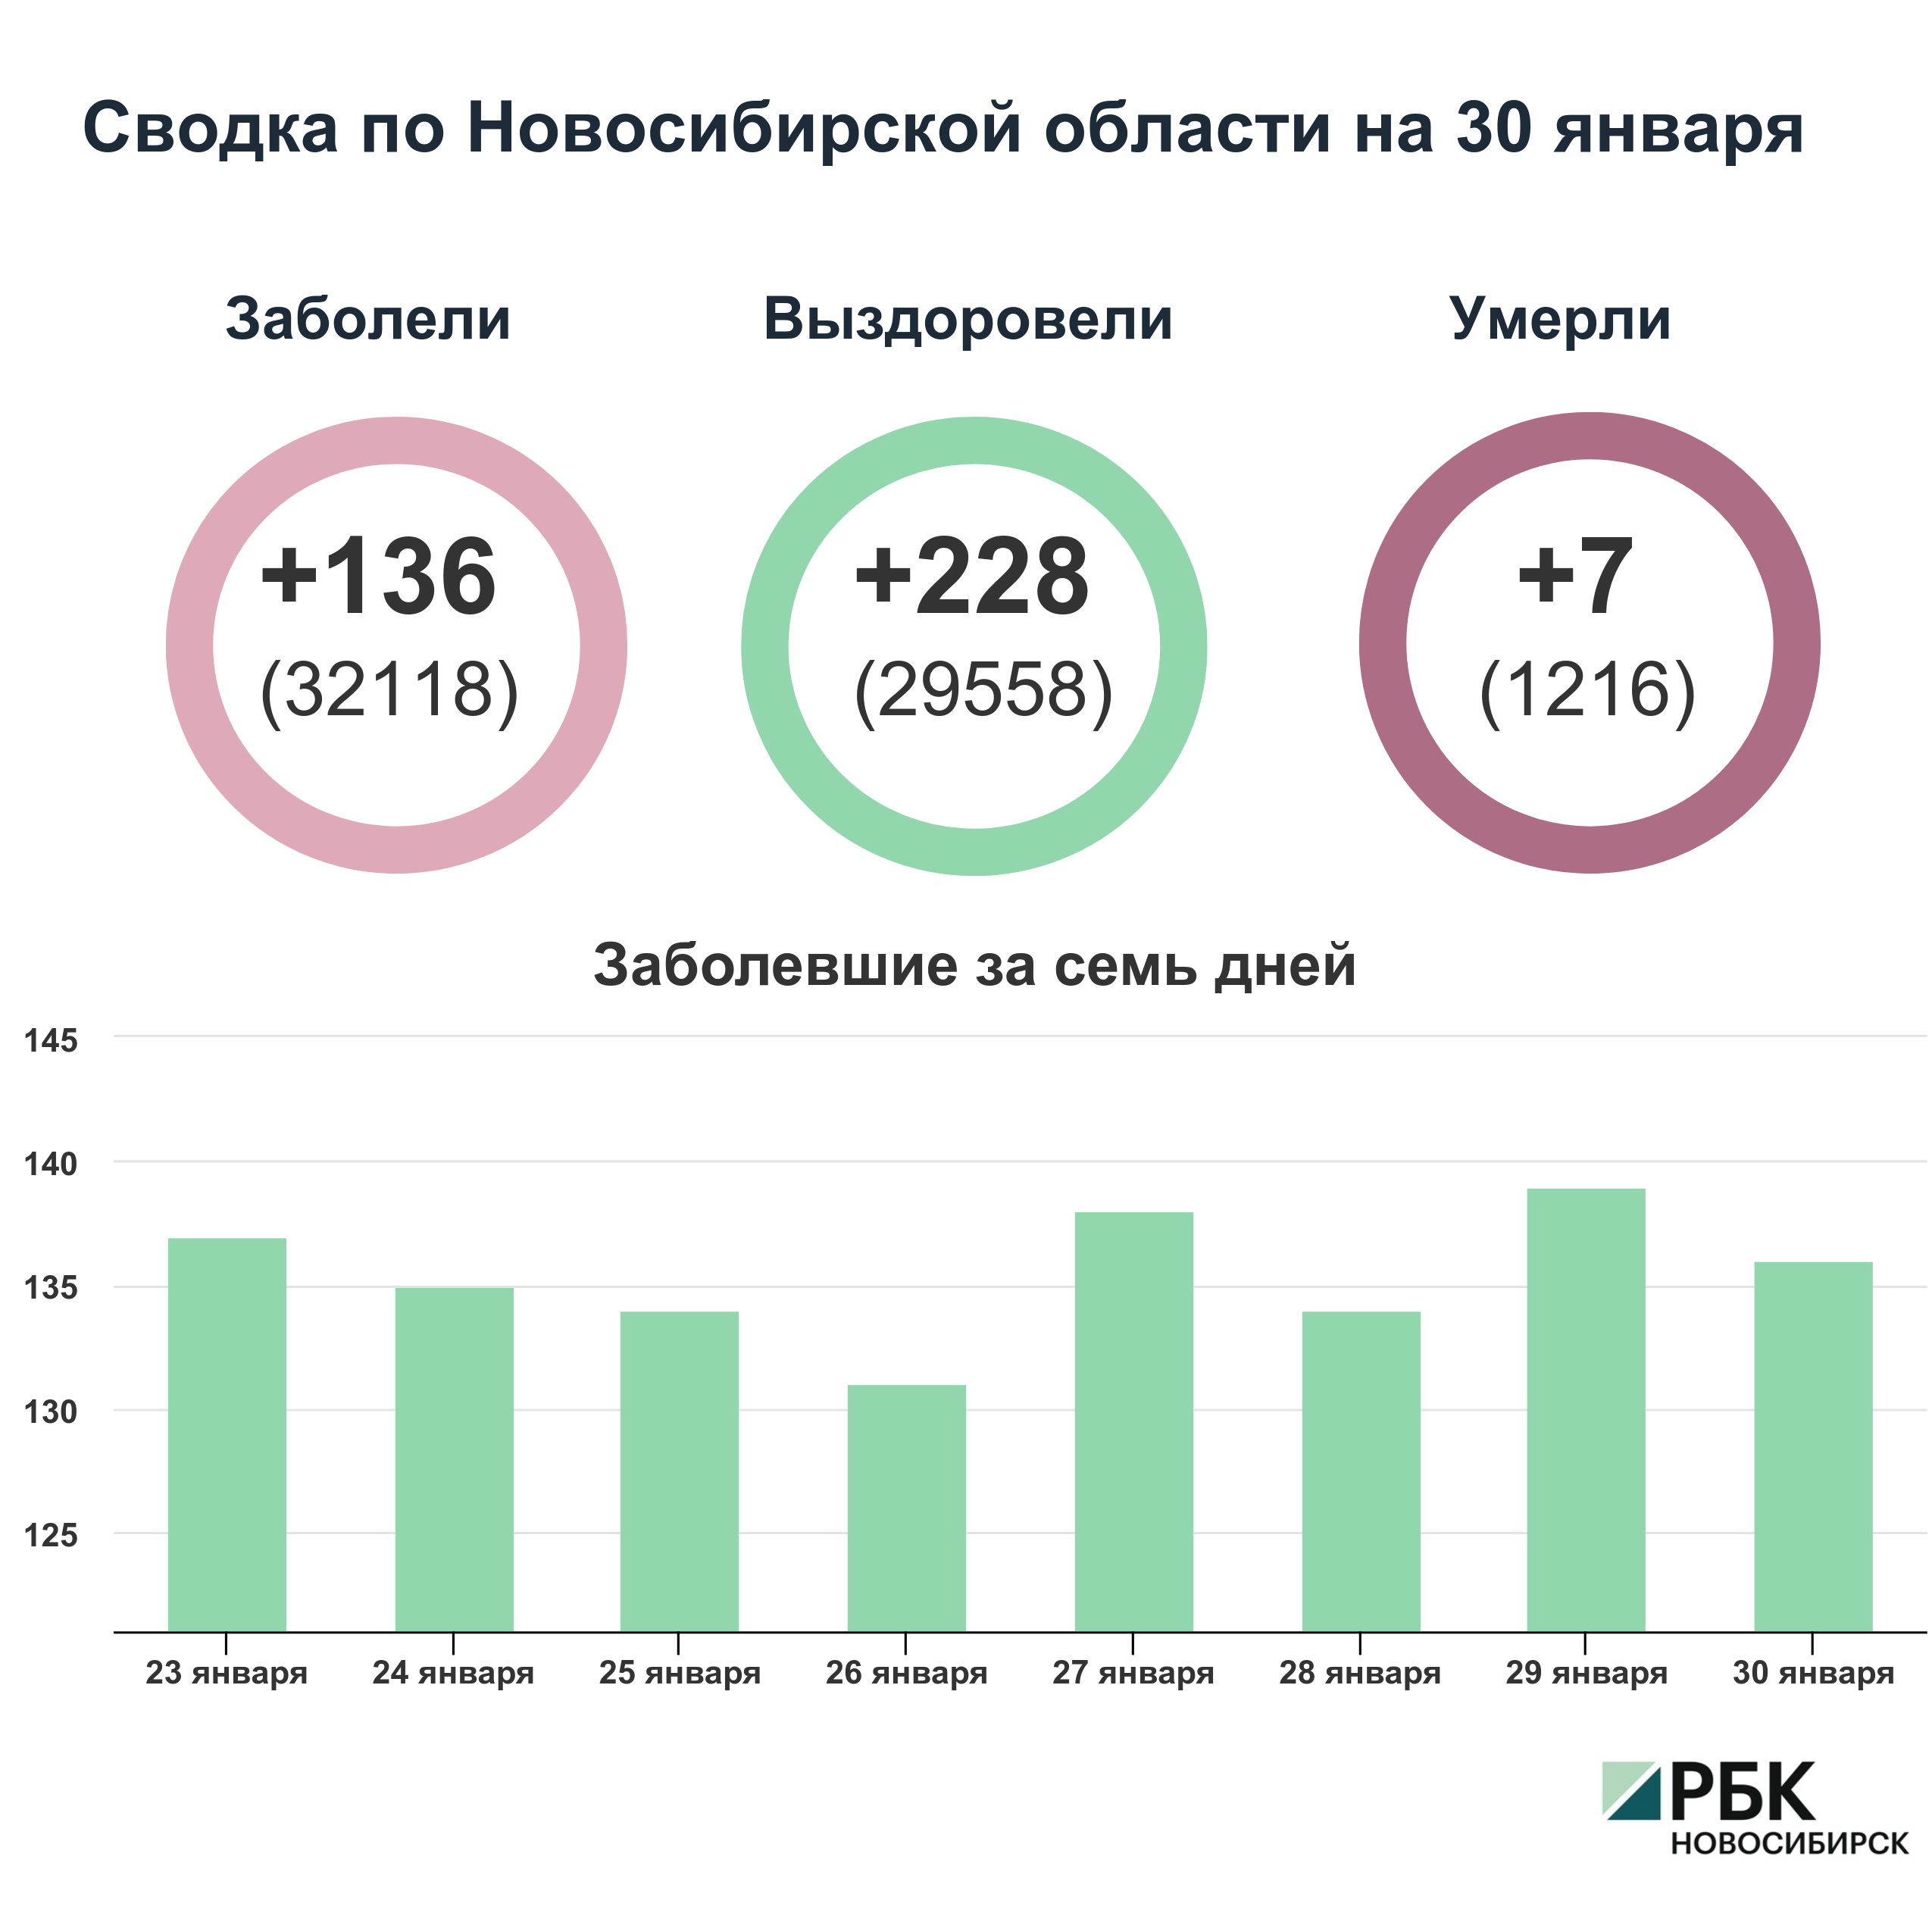 Коронавирус в Новосибирске: сводка на 30 января